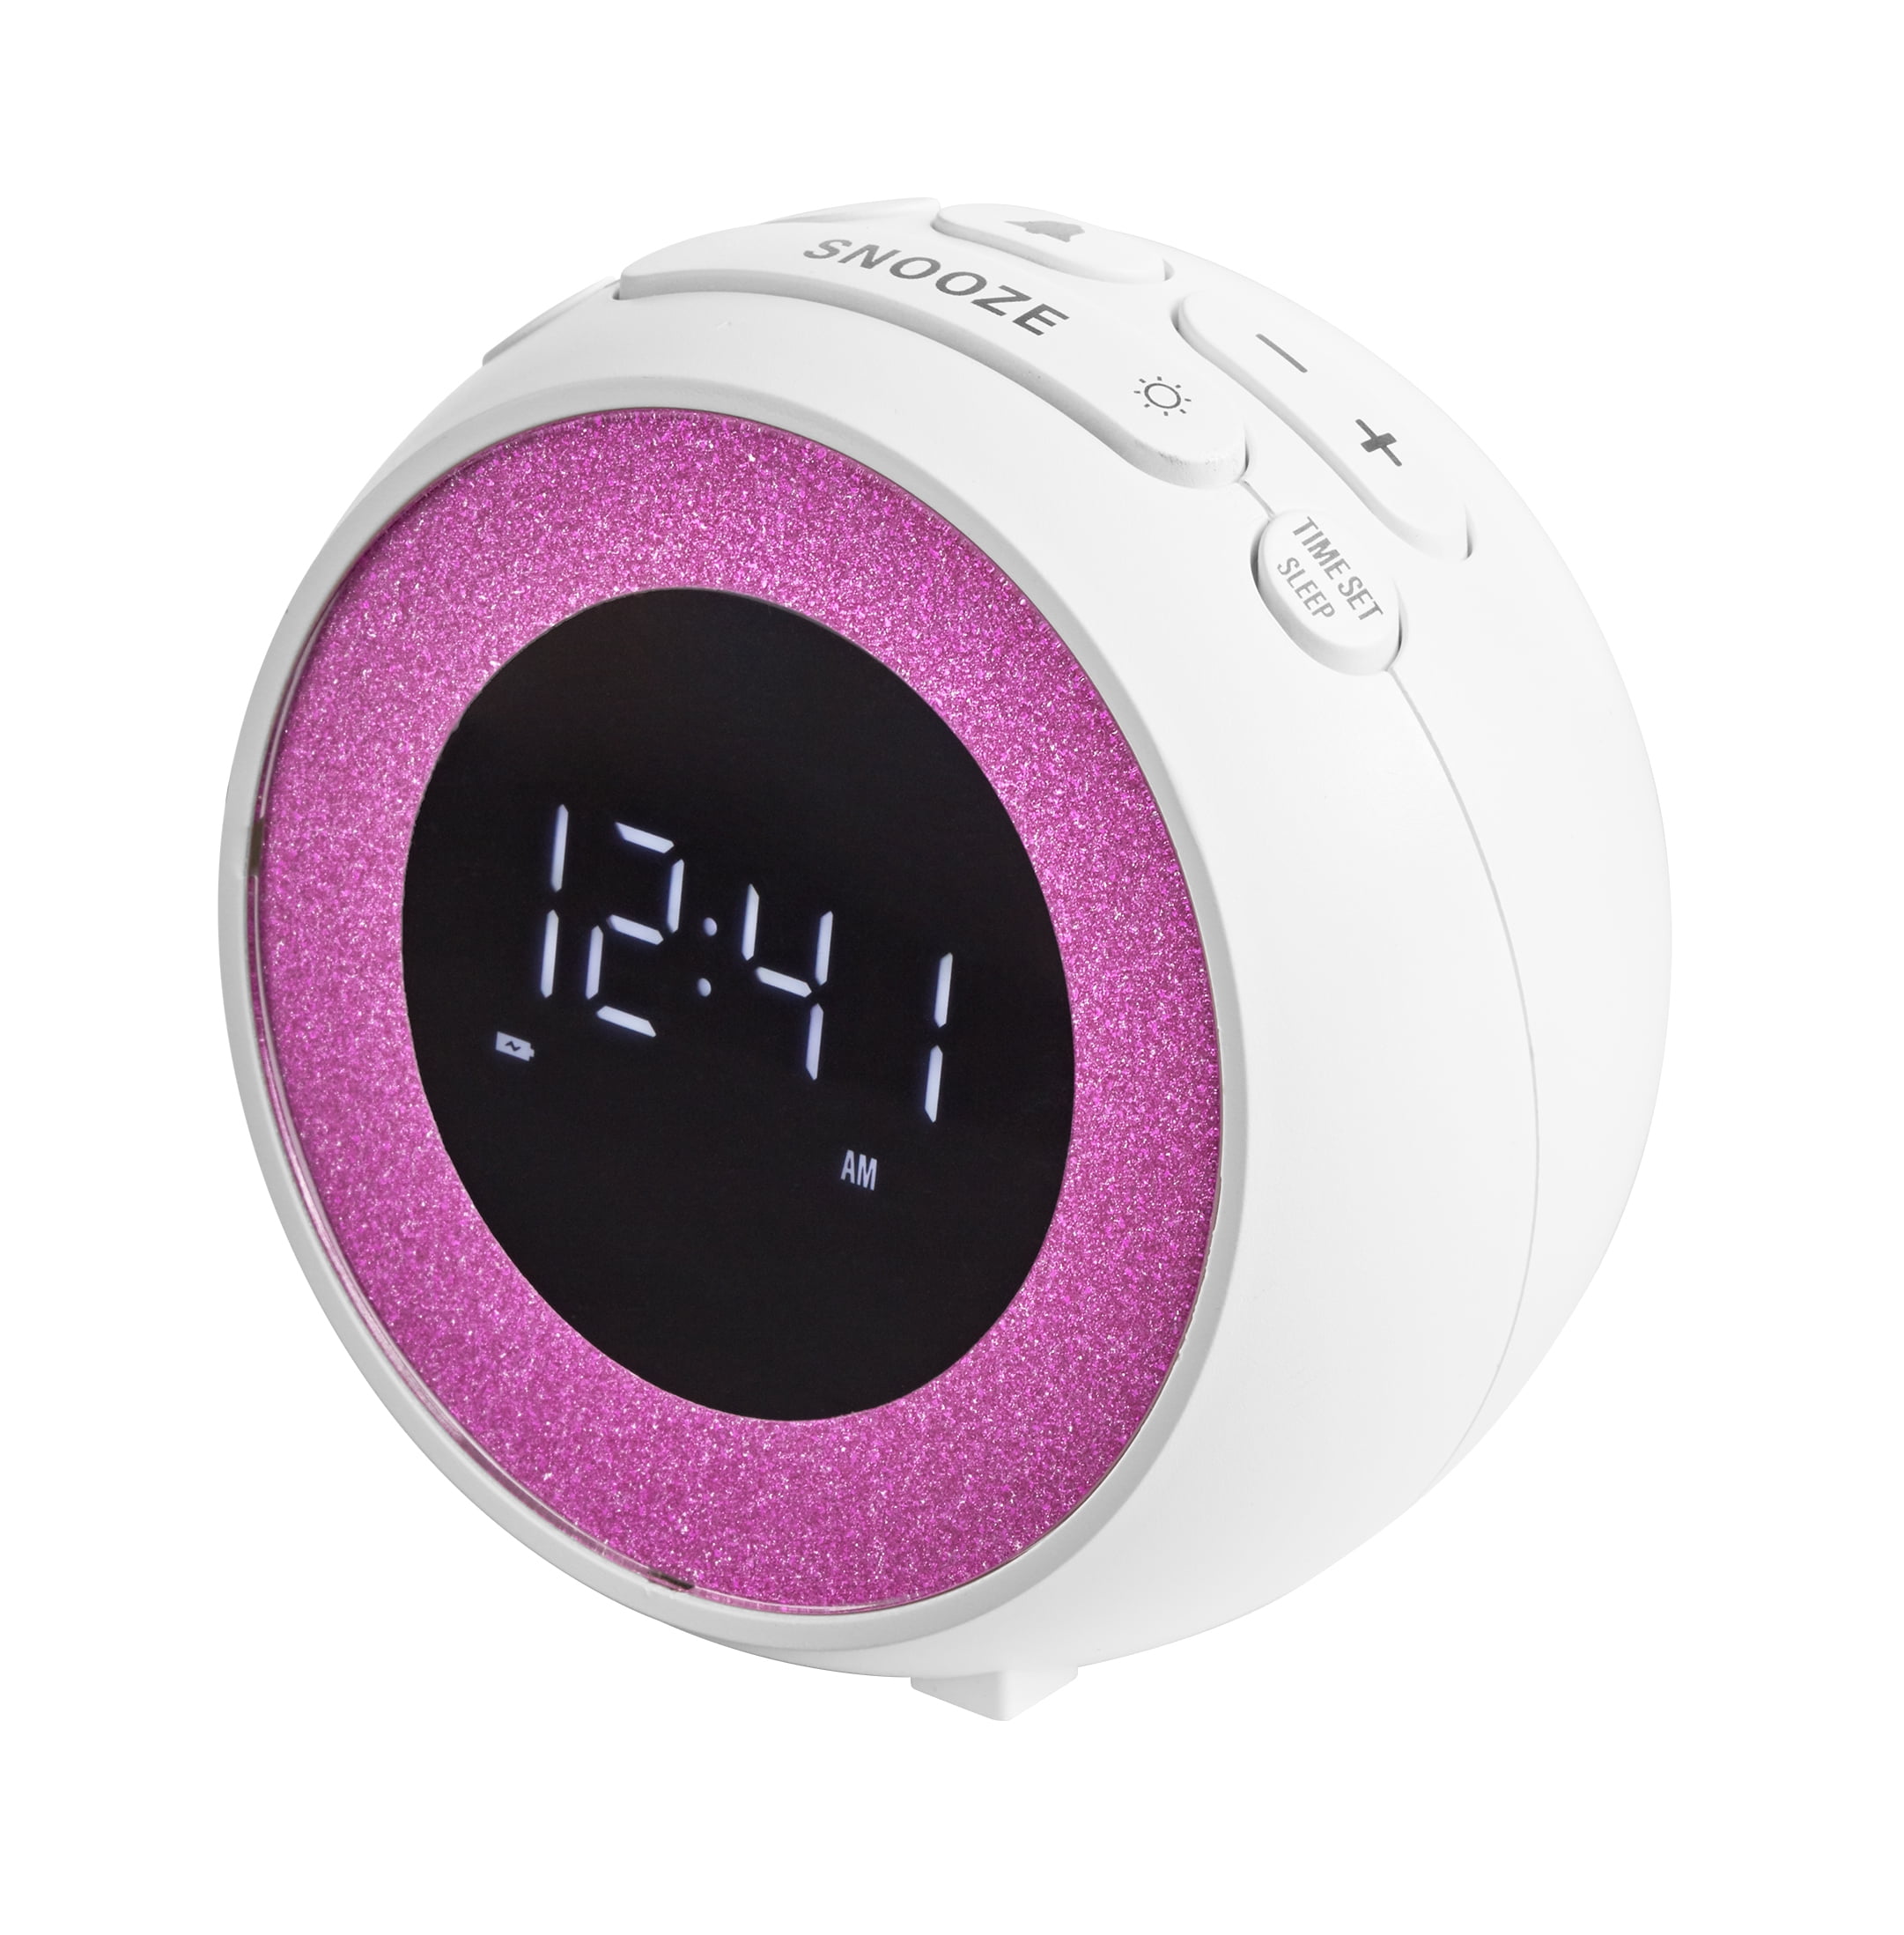 onn. Digital Alarm Clock with Radio